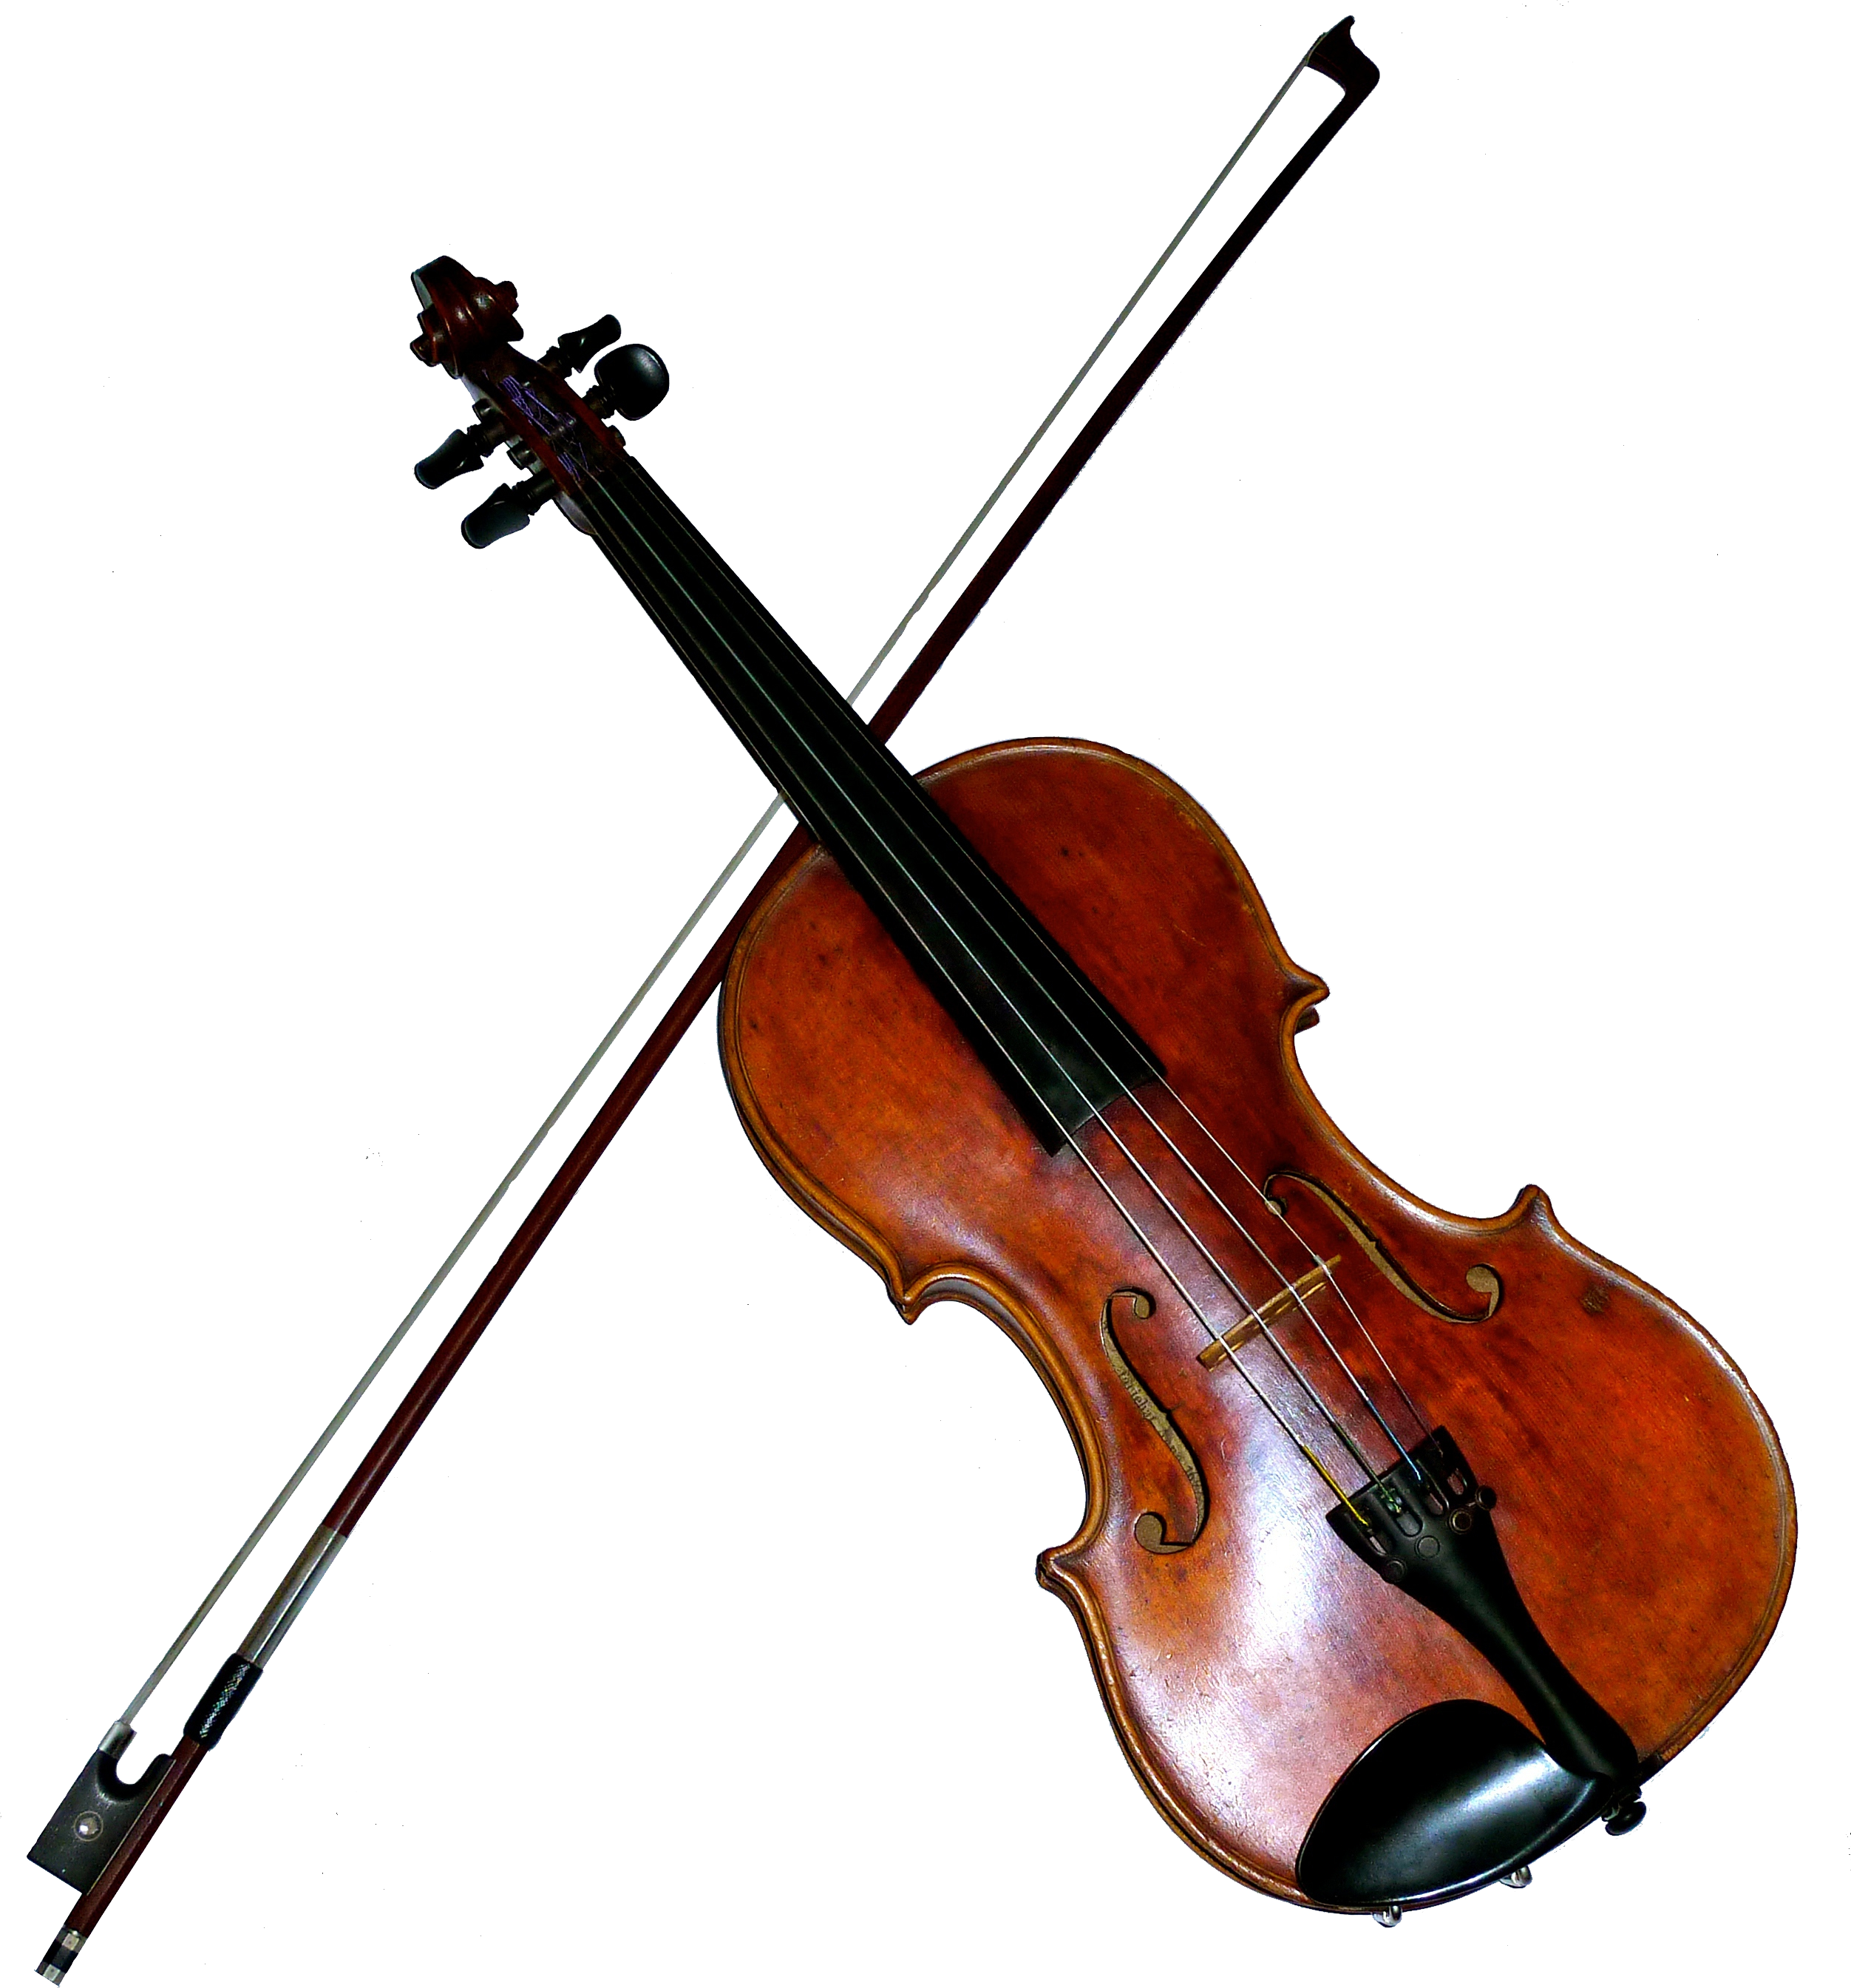 A Violin Lying On A Black Background